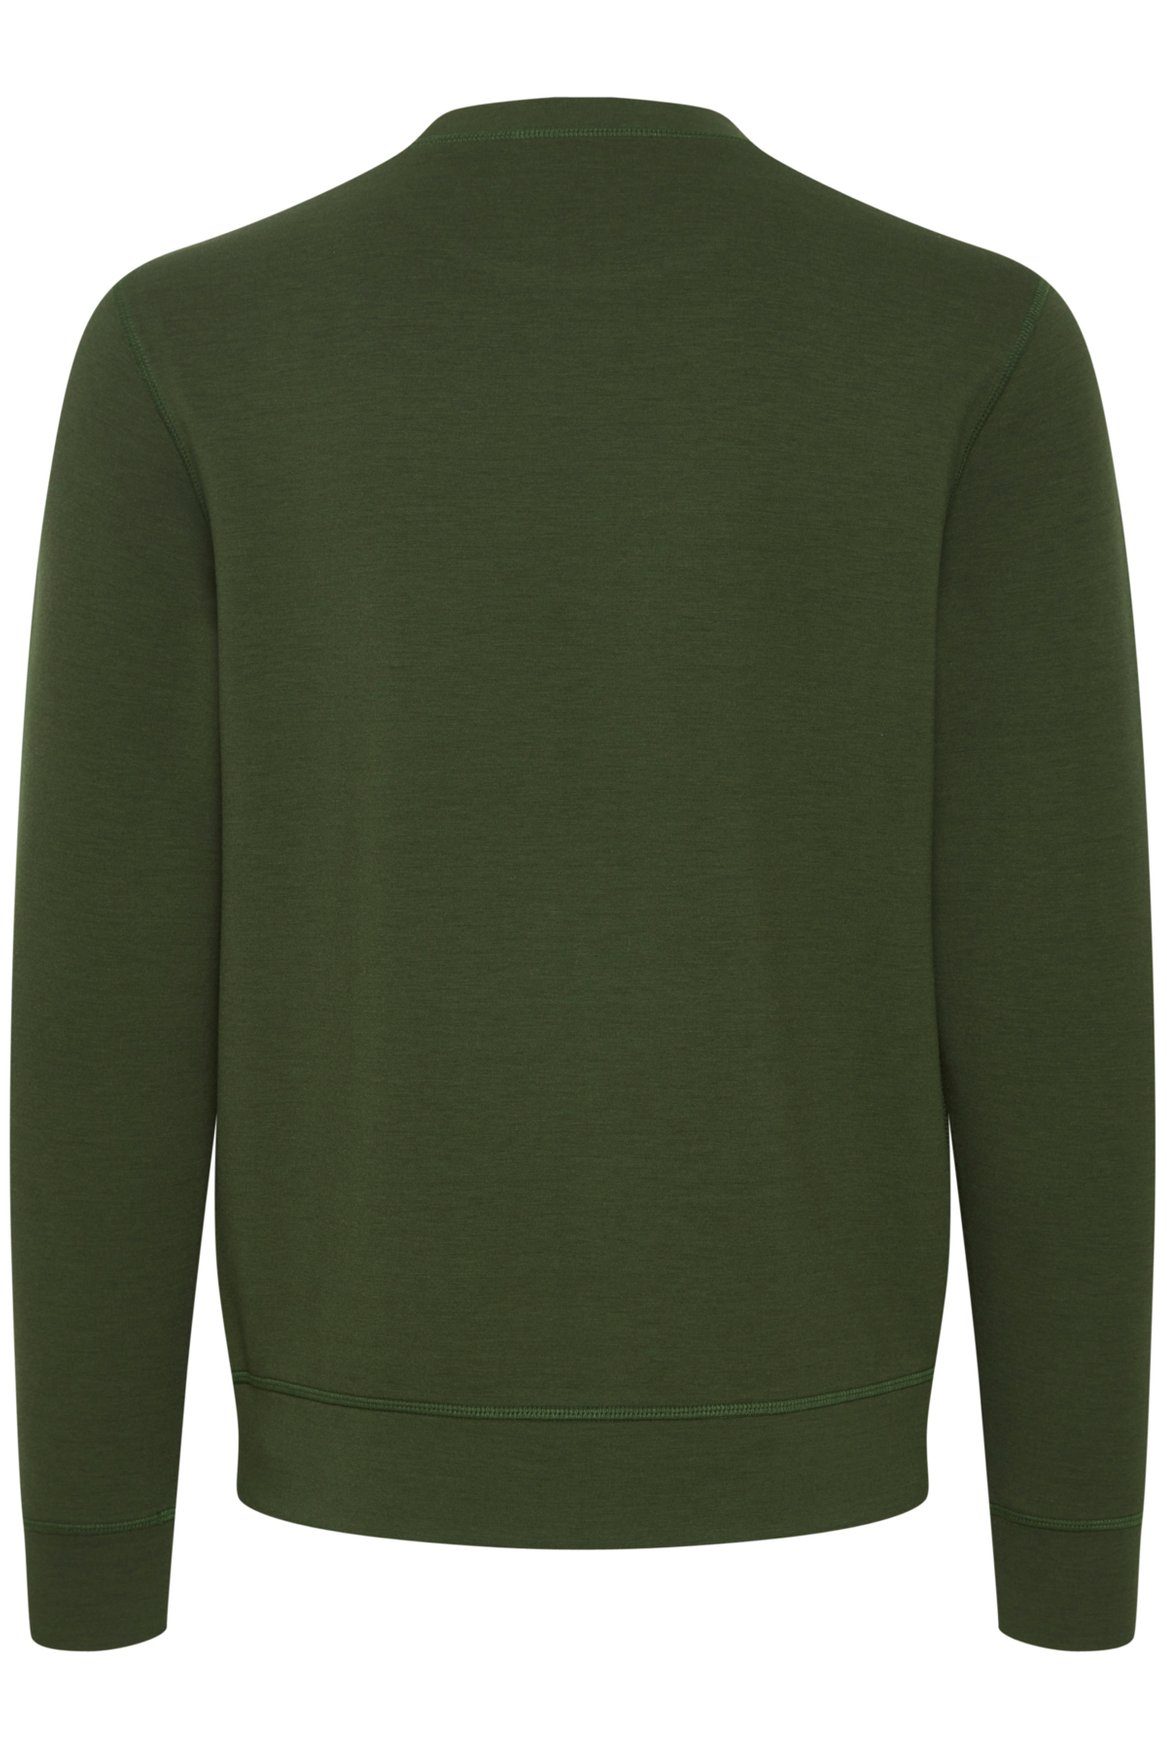 Rundhals CFSebastian Grün Pullover Sweatshirt Friday 5917 Basic in Casual Langarm